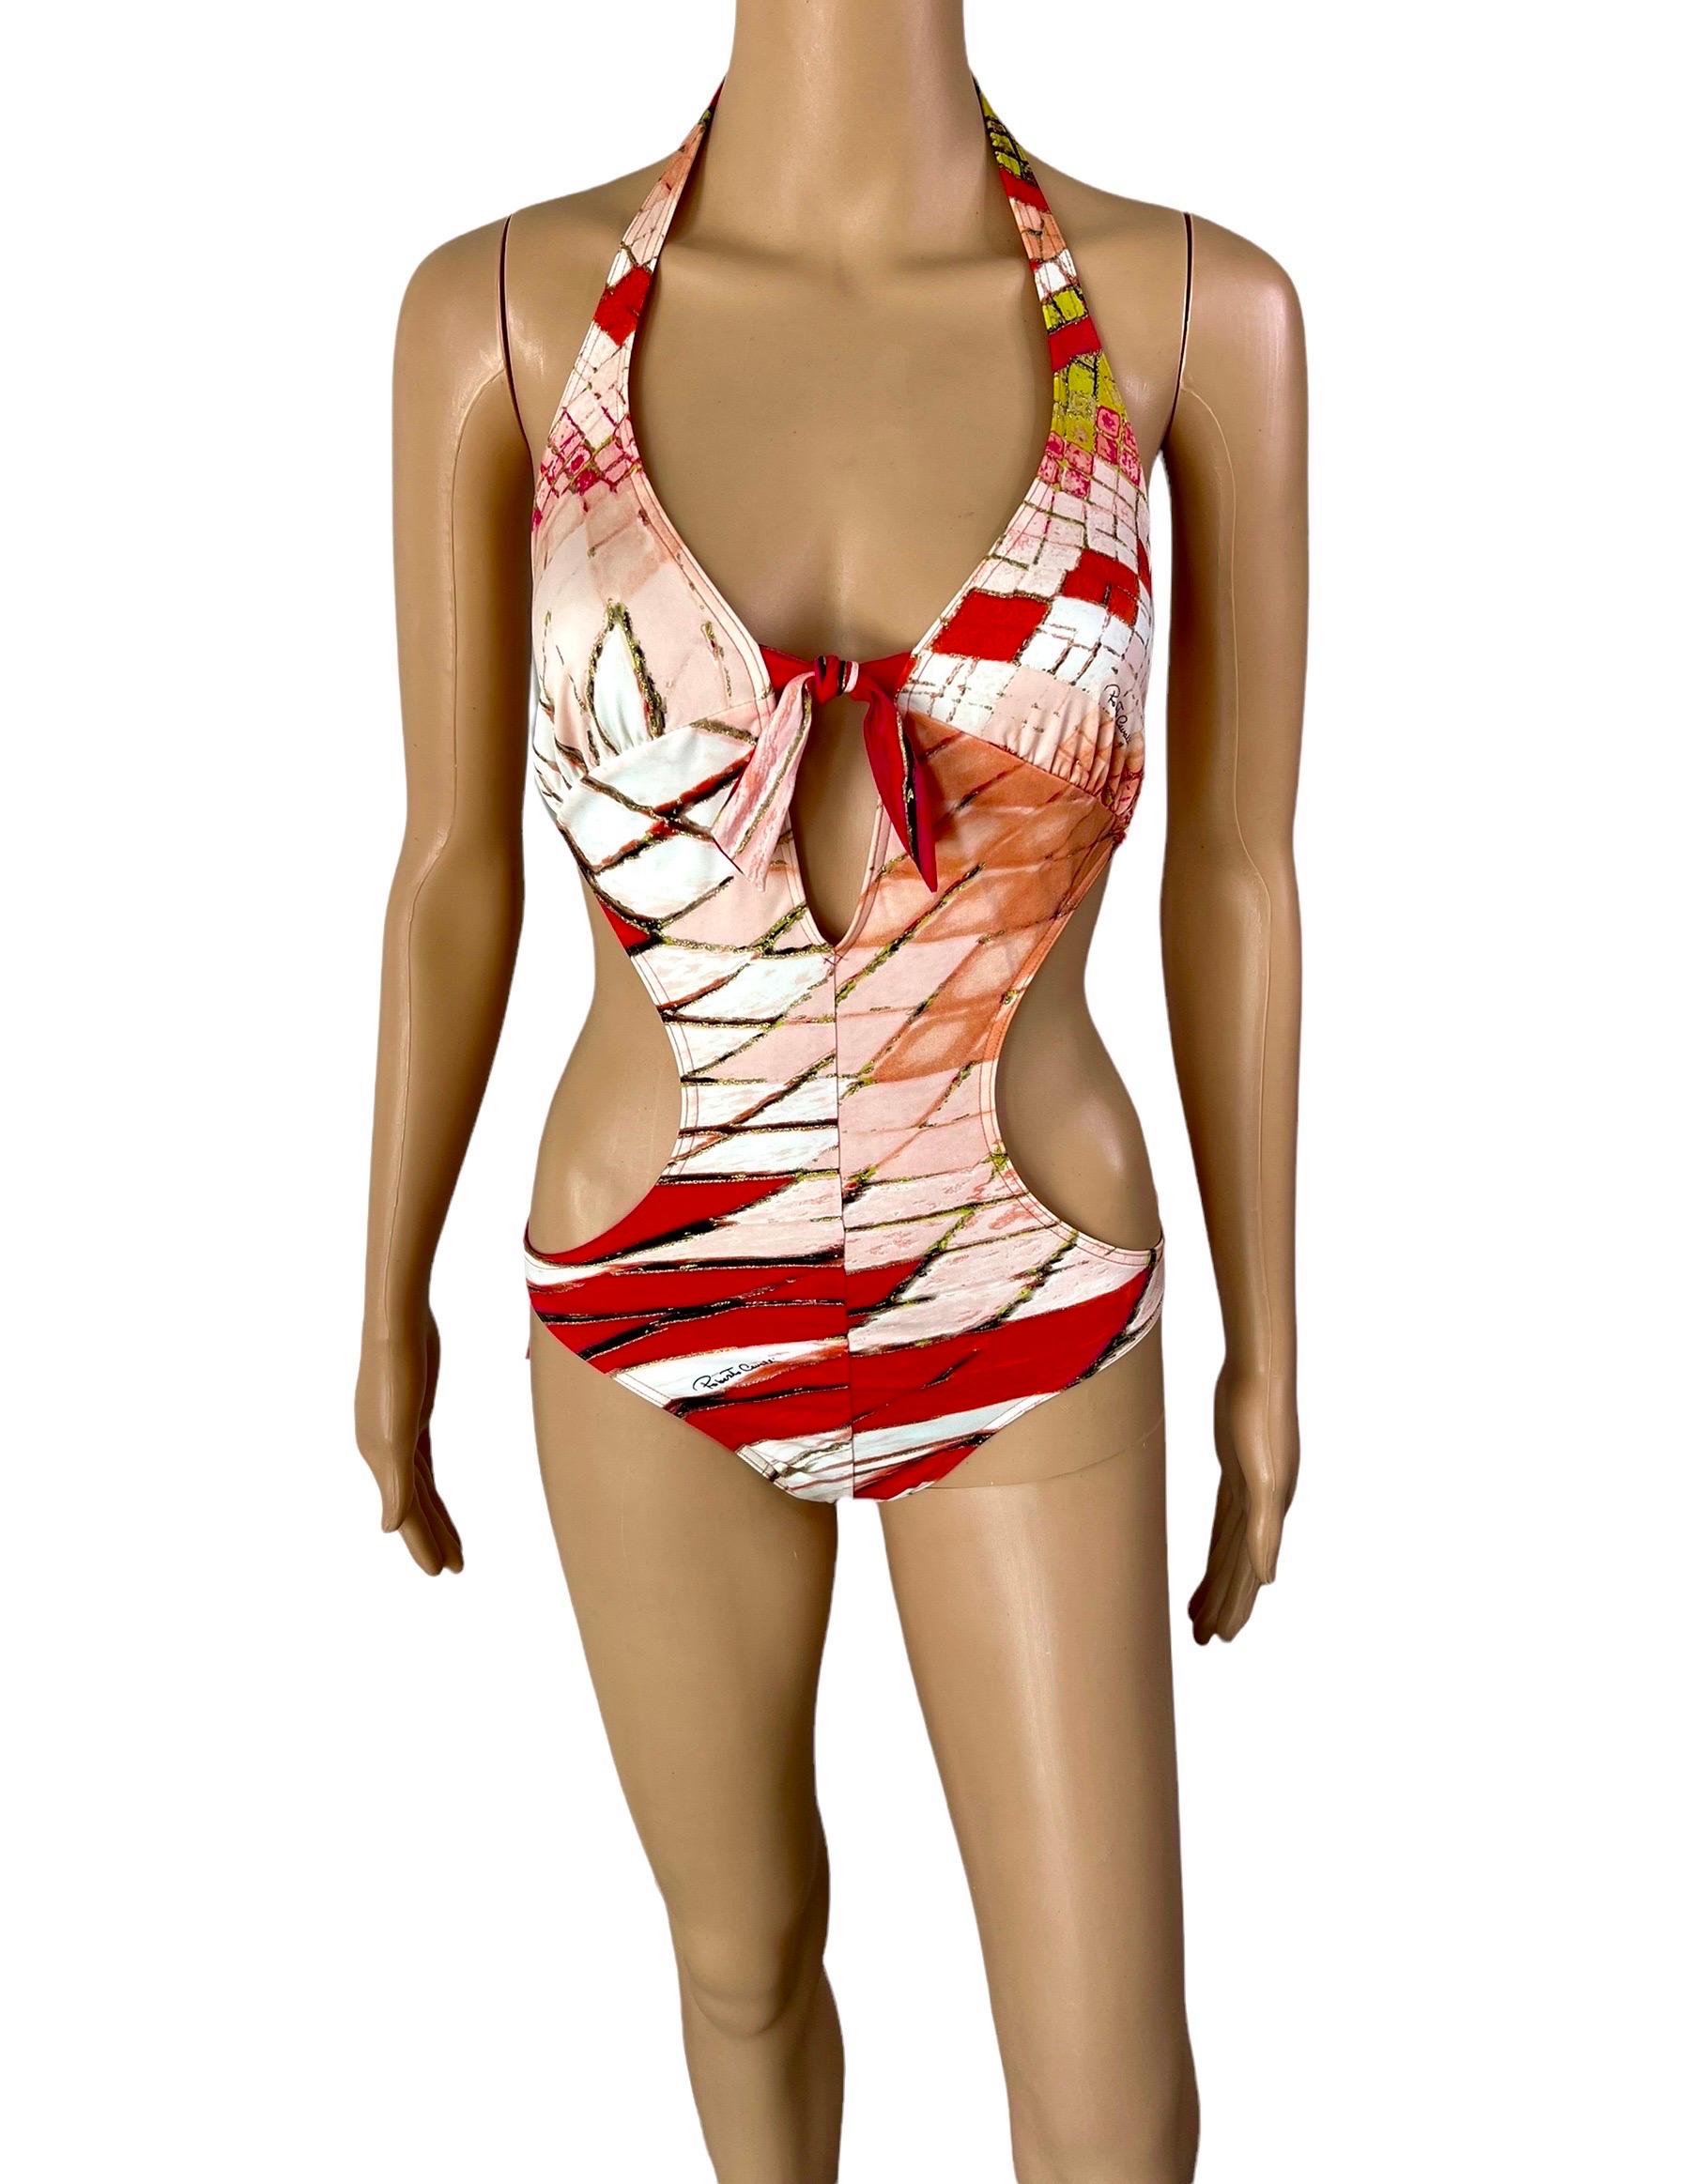 Beige Roberto Cavalli S/S 2004 Plunging Cutout One Piece Bodysuit Swimwear Swimsuit For Sale